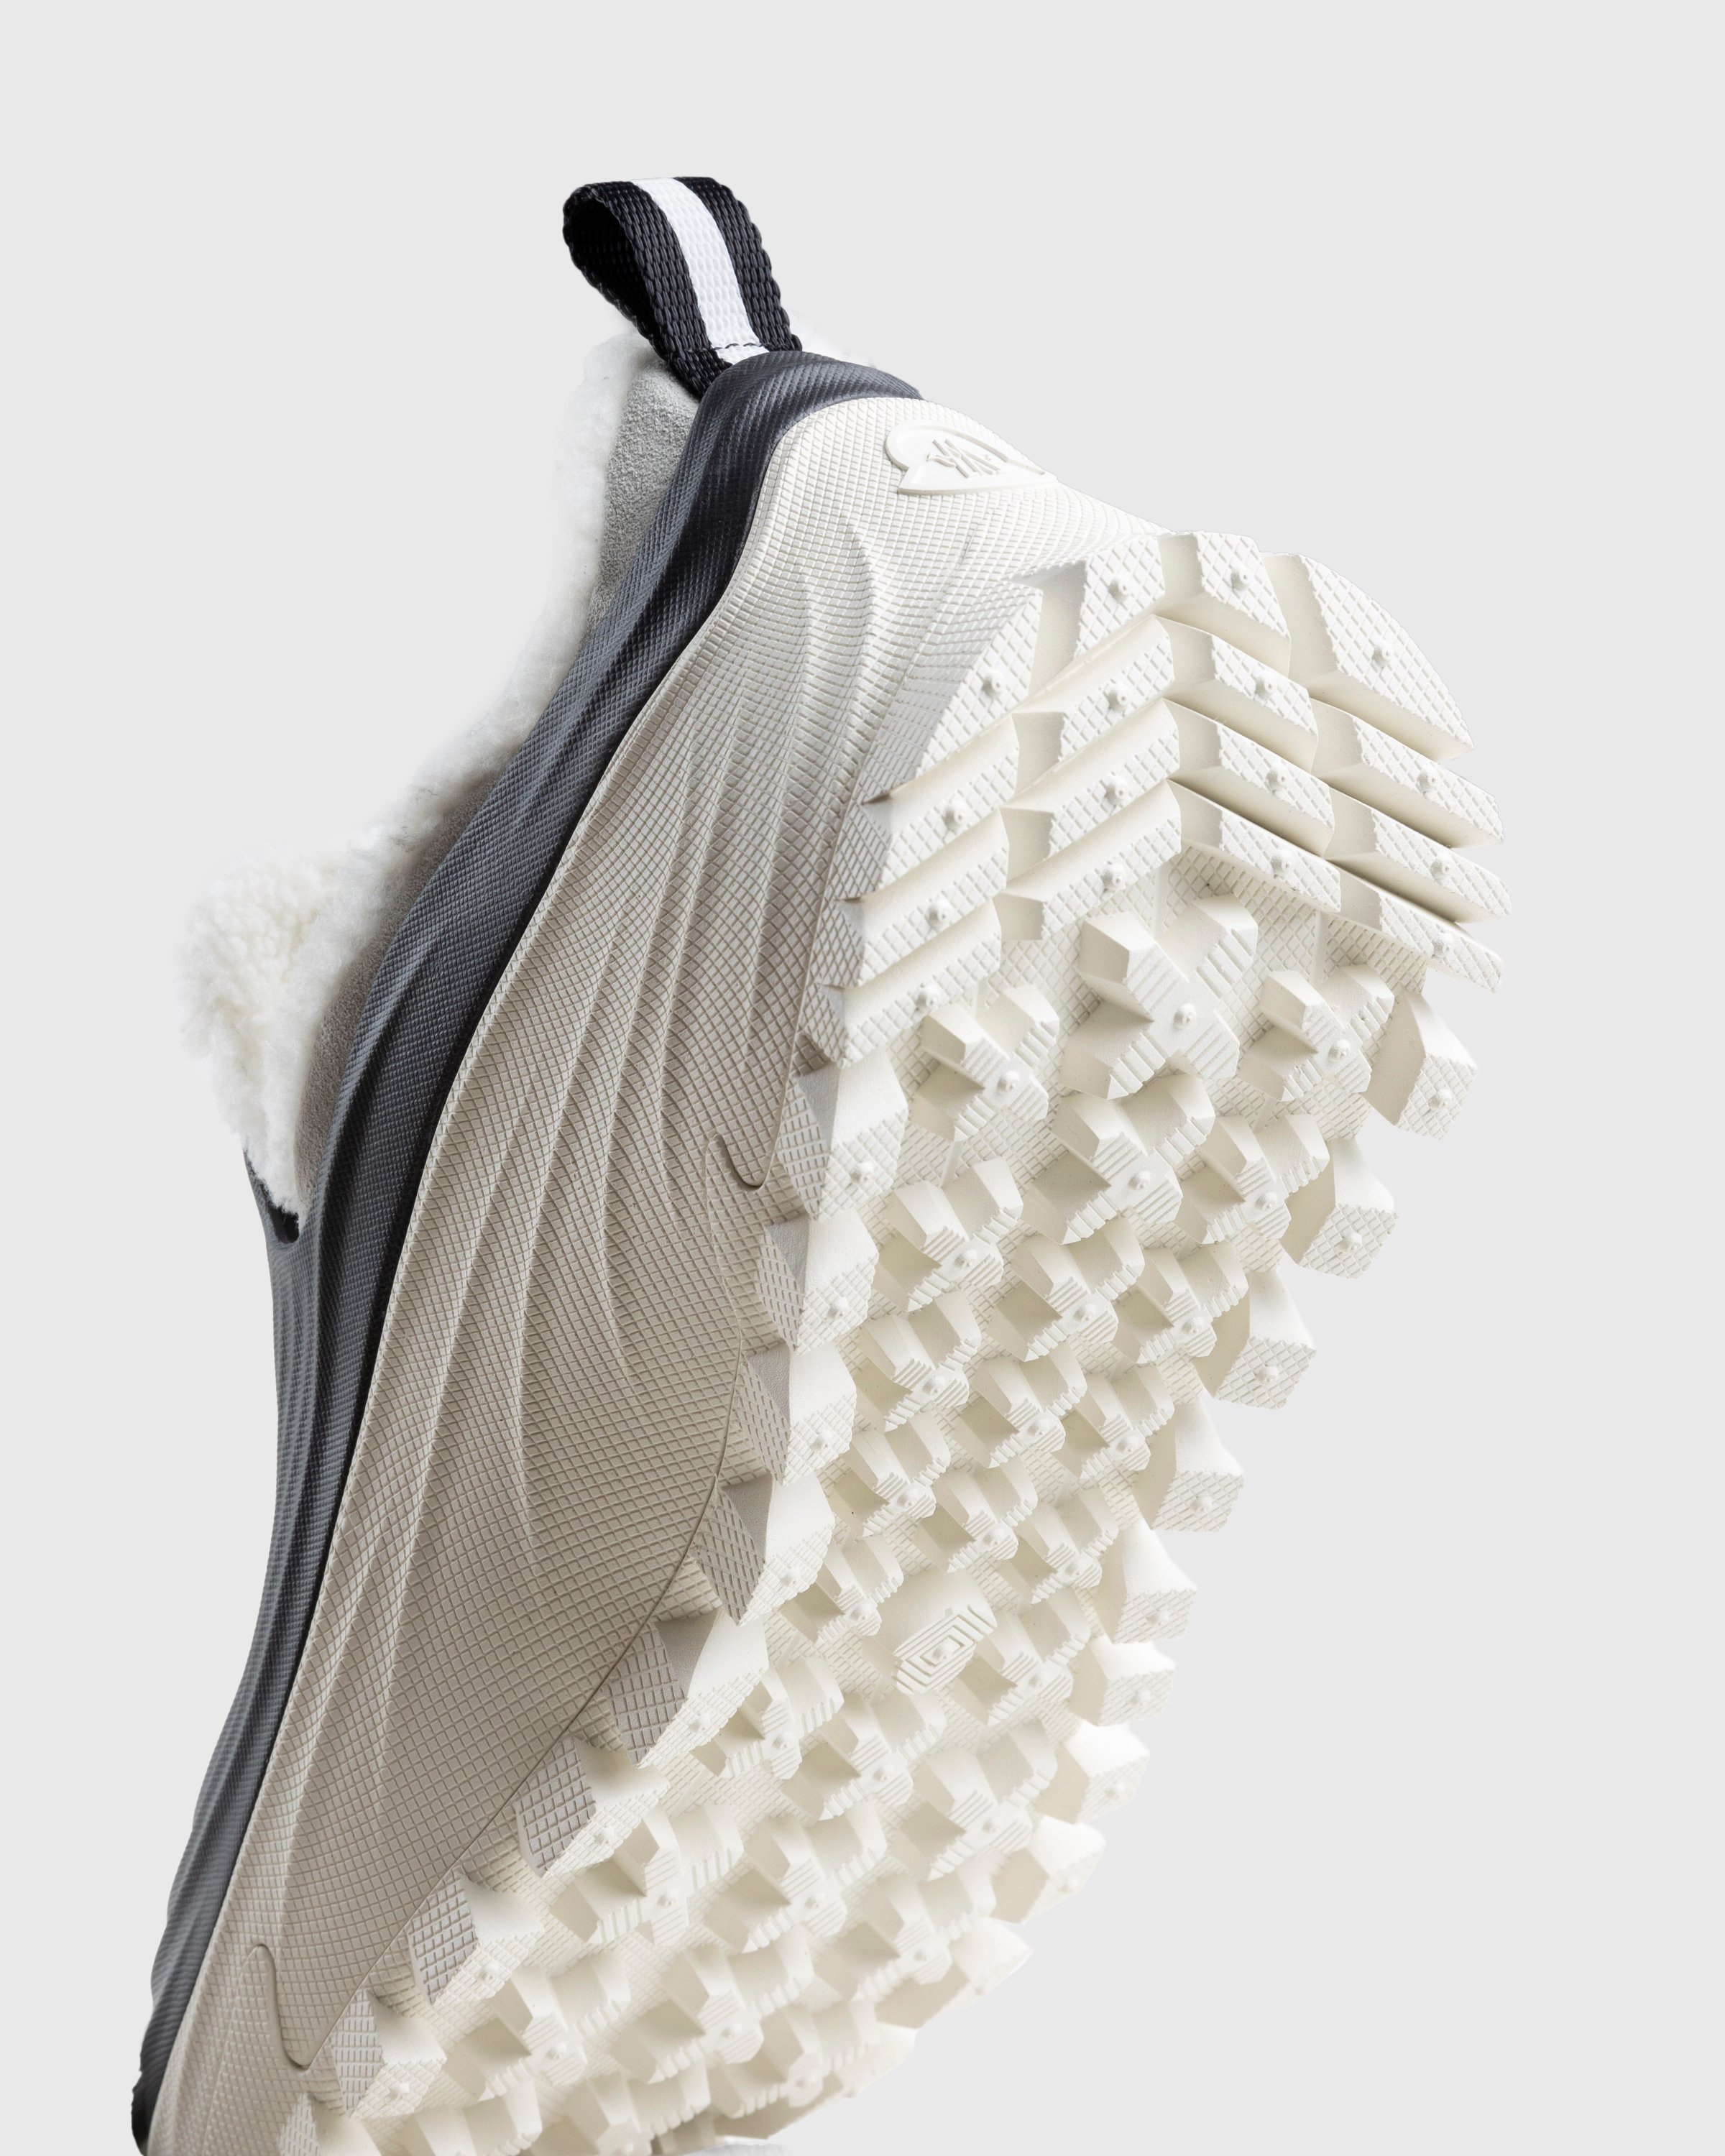 Moncler - Aqua Rain Boots Black/White - Footwear - Grey - Image 6